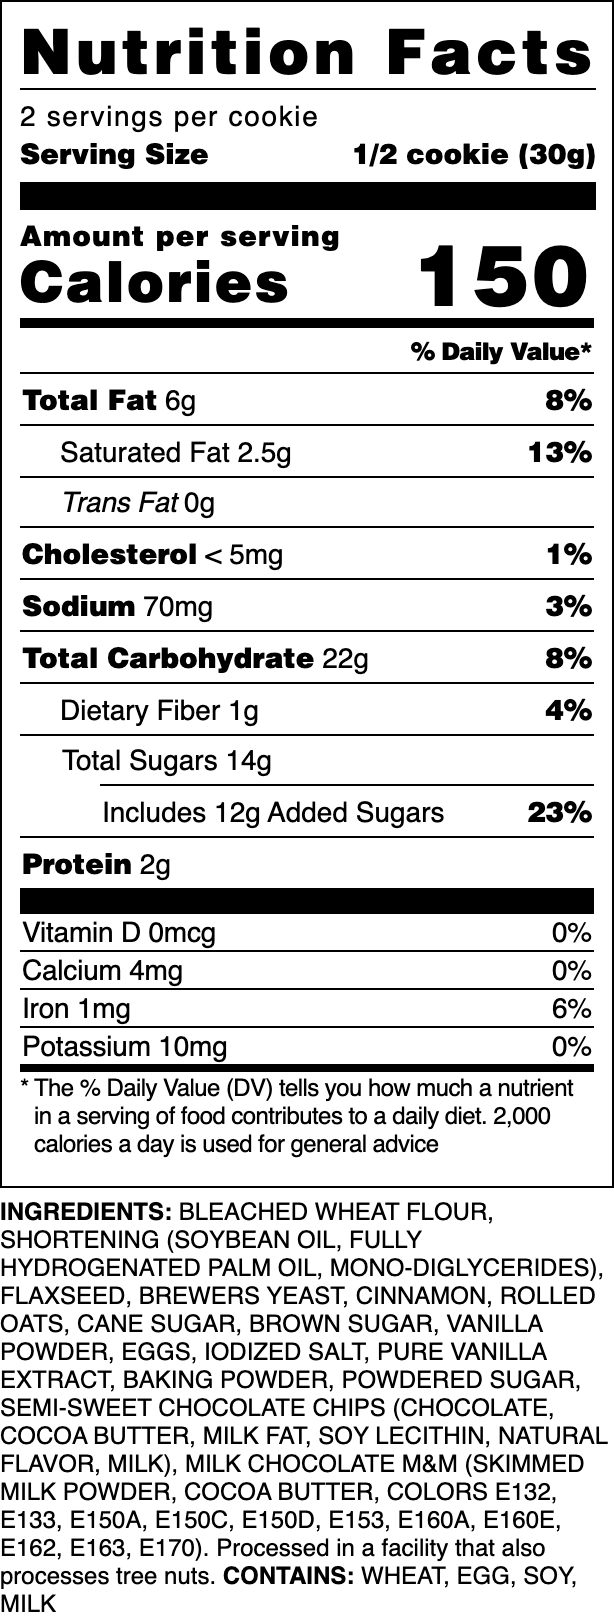 Nutrition label for our Lactation cookie.